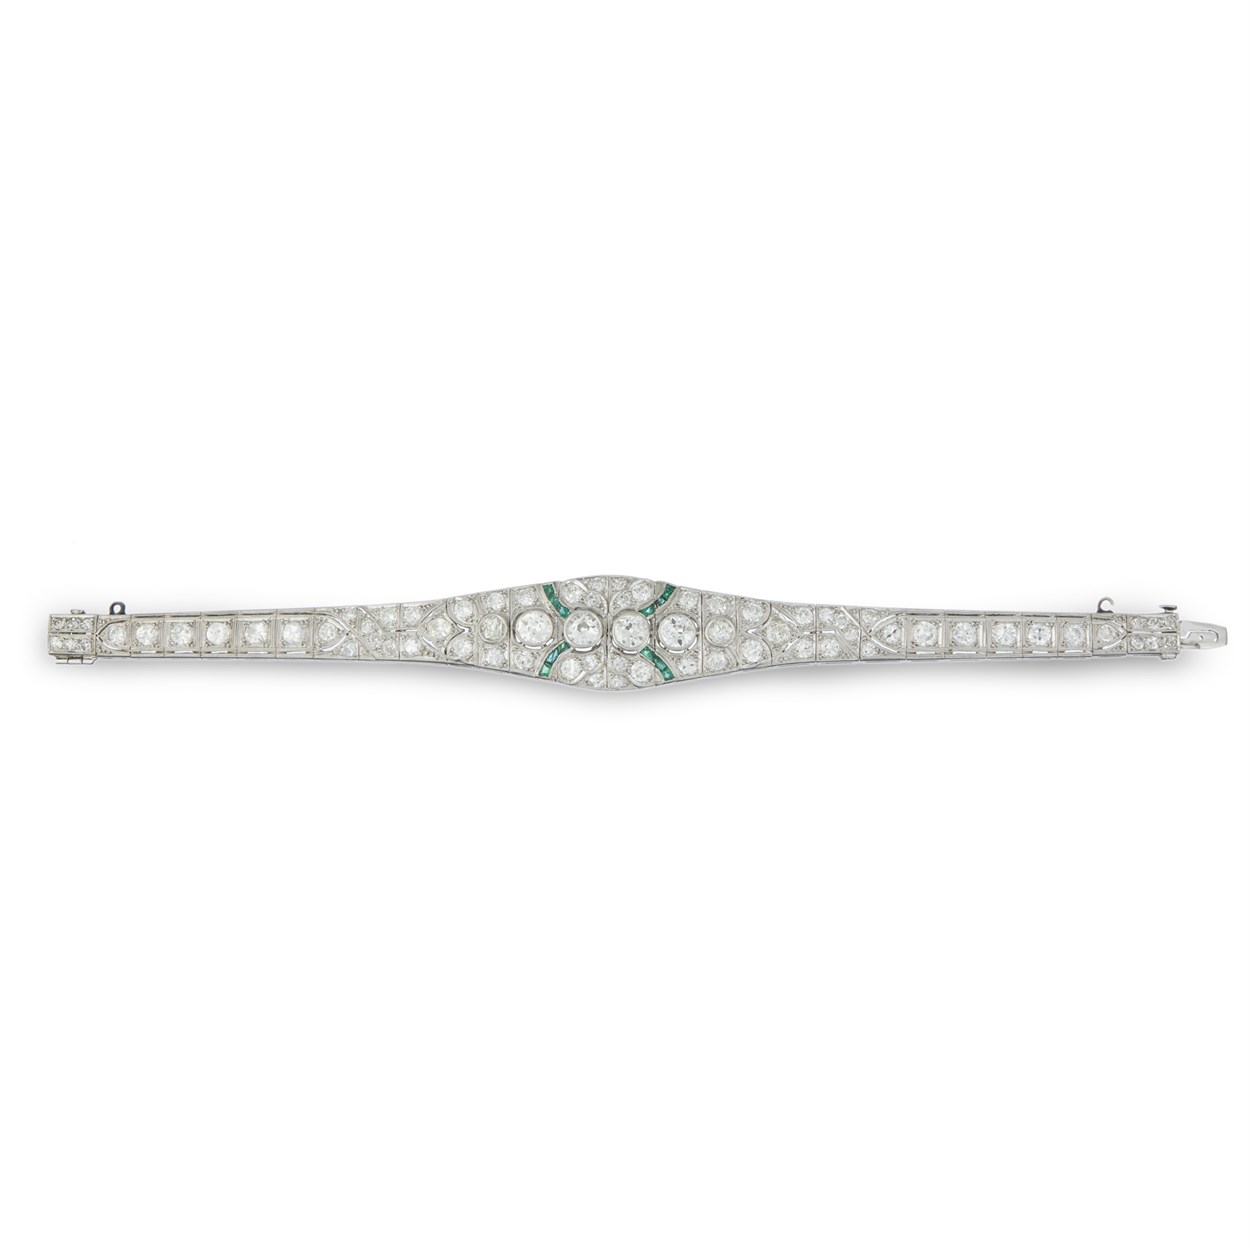 Lot 42 - An Art Deco platinum, diamond, and emerald bracelet